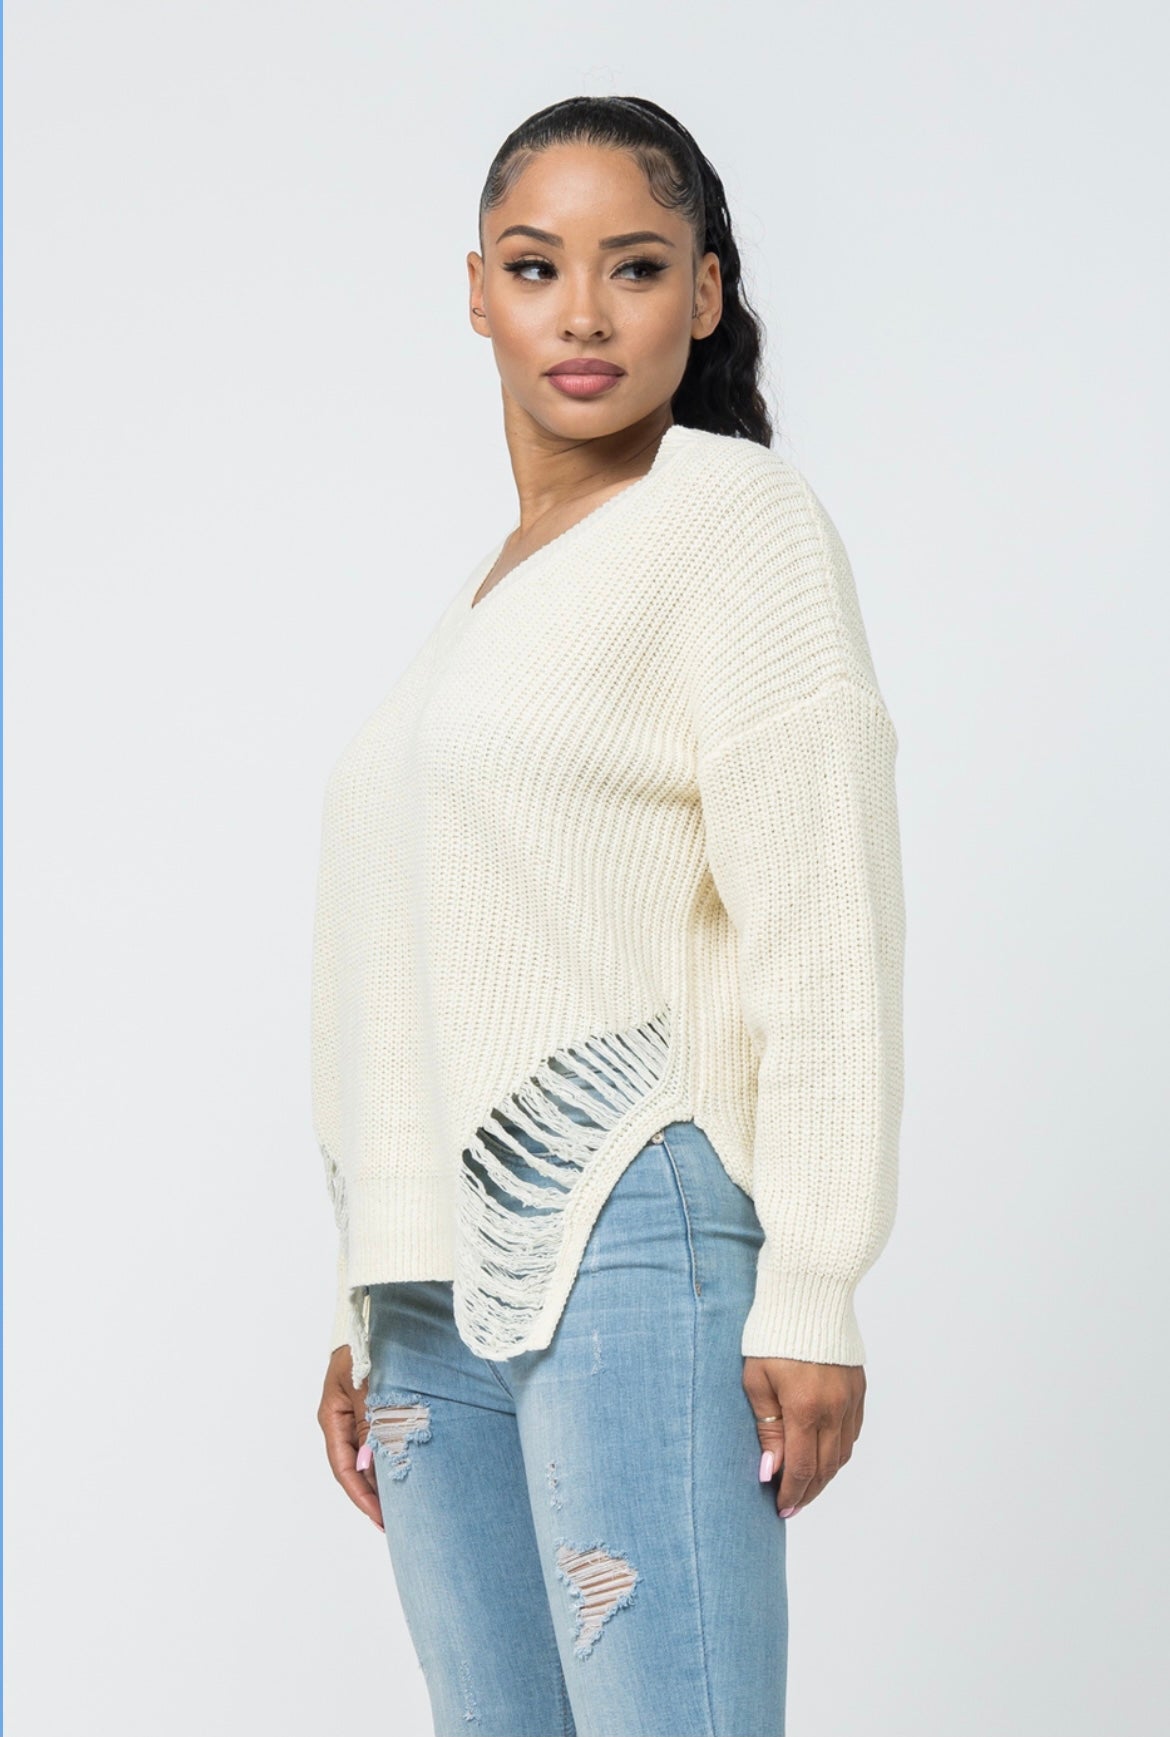 Fallin’ For You Sweater